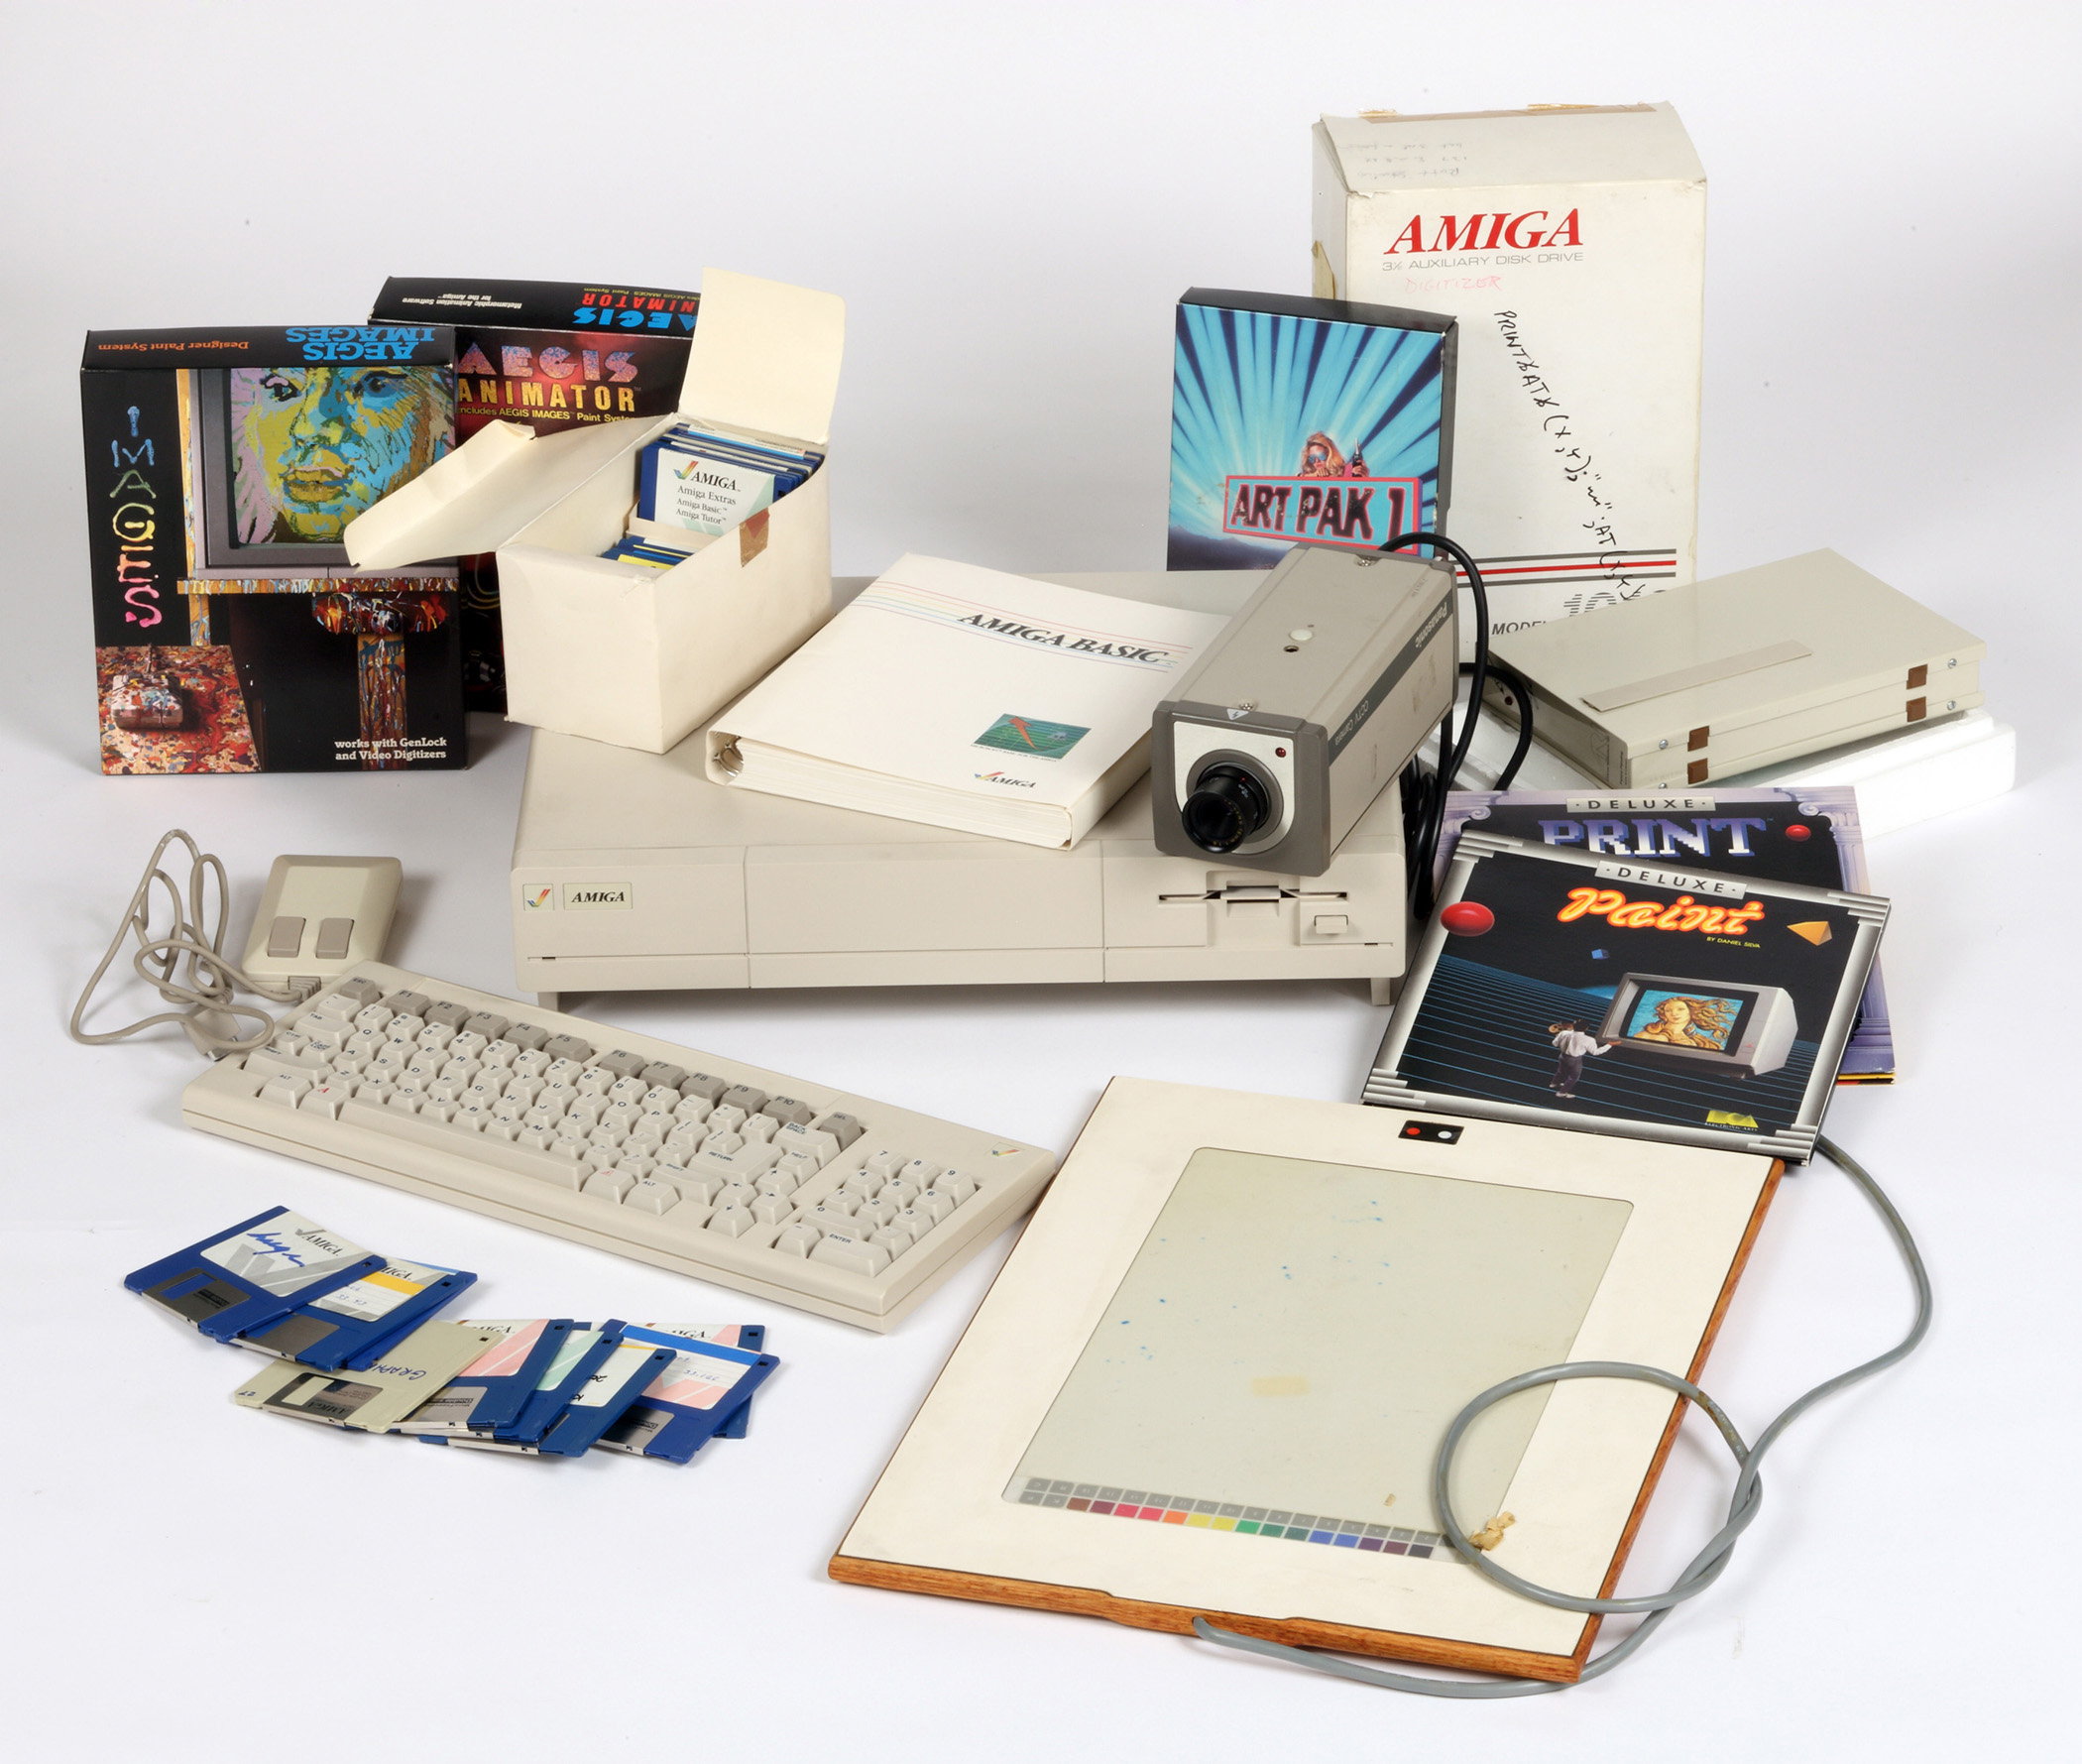 4_Commodore_Amiga_computer_equipment_used_by_Andy_Warhol_1985-86.jpg